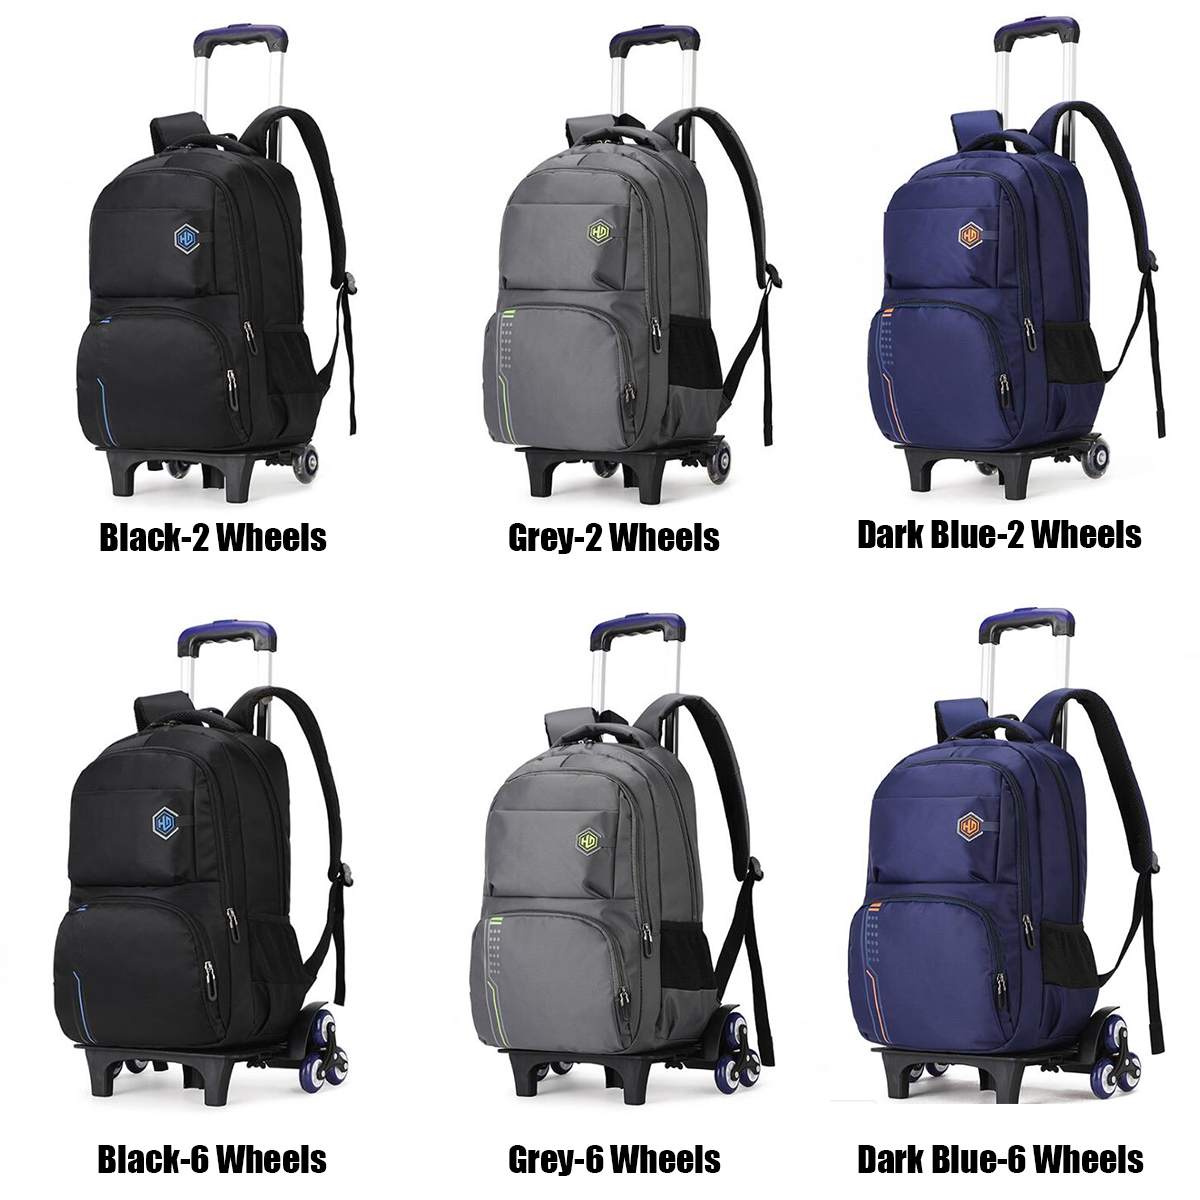 2/6 Wheels Travel Rolling Luggage Bag School Trolley Backpack For Boys Backpack On Wheels Kid's Trolley School wheeled Backpack